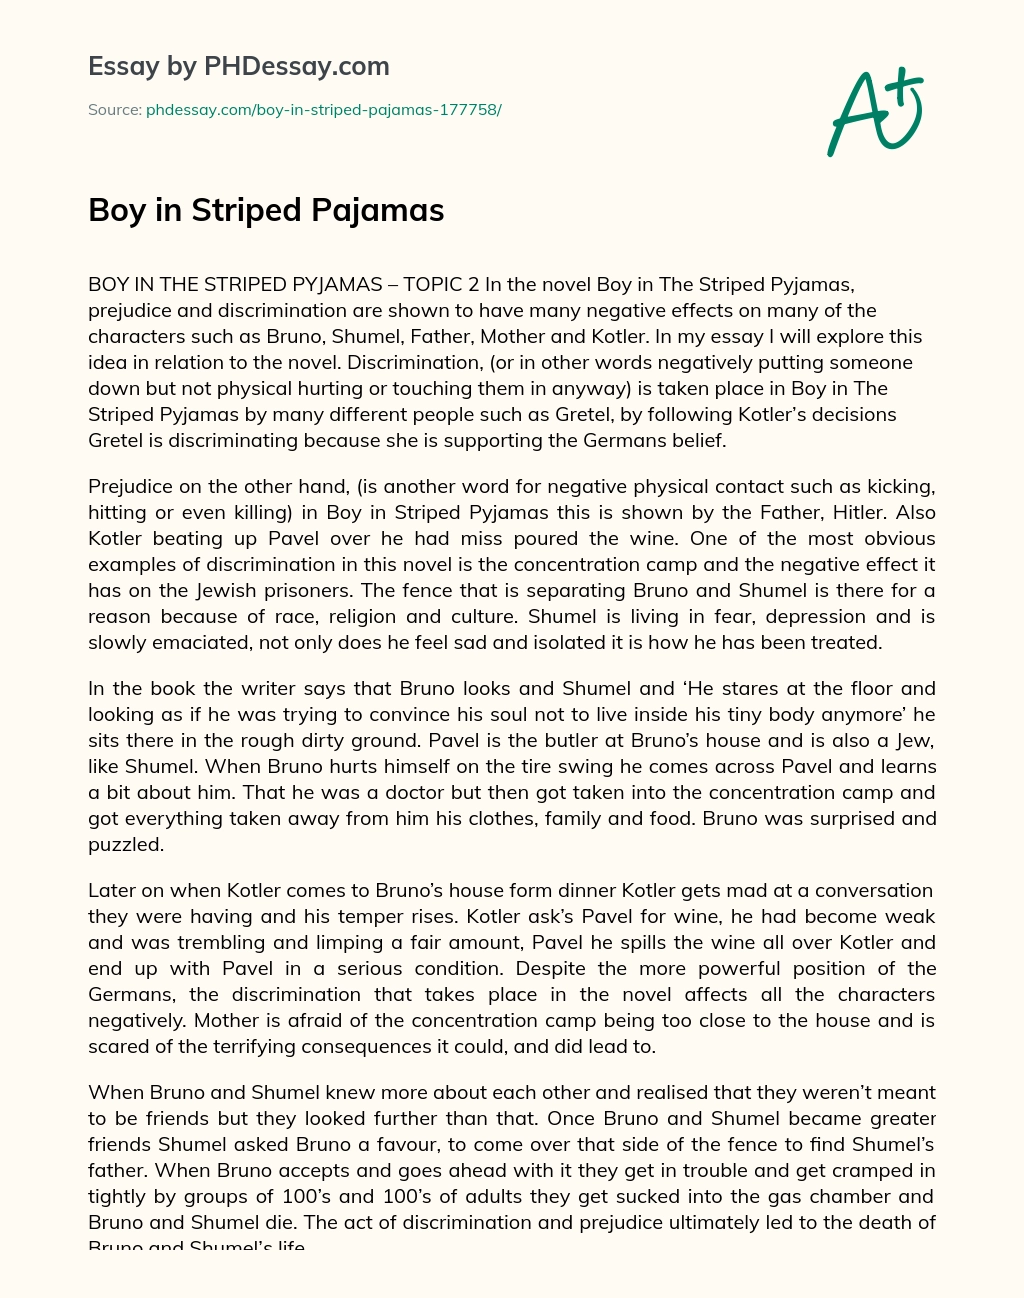 Boy in Striped Pajamas essay